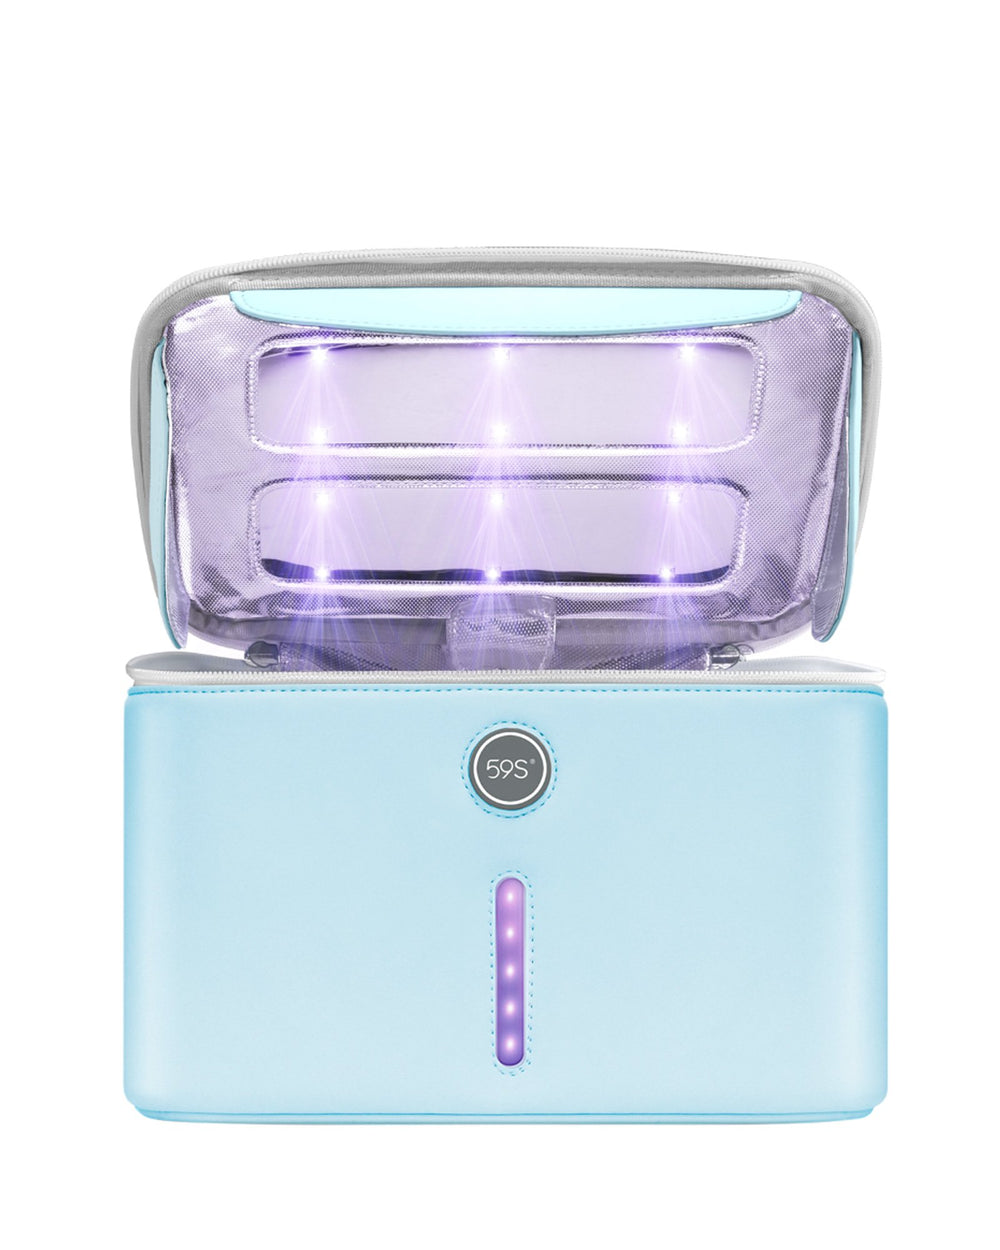 P55- Pro UV Light Sanitizer Bag with 24 UVC LEDs